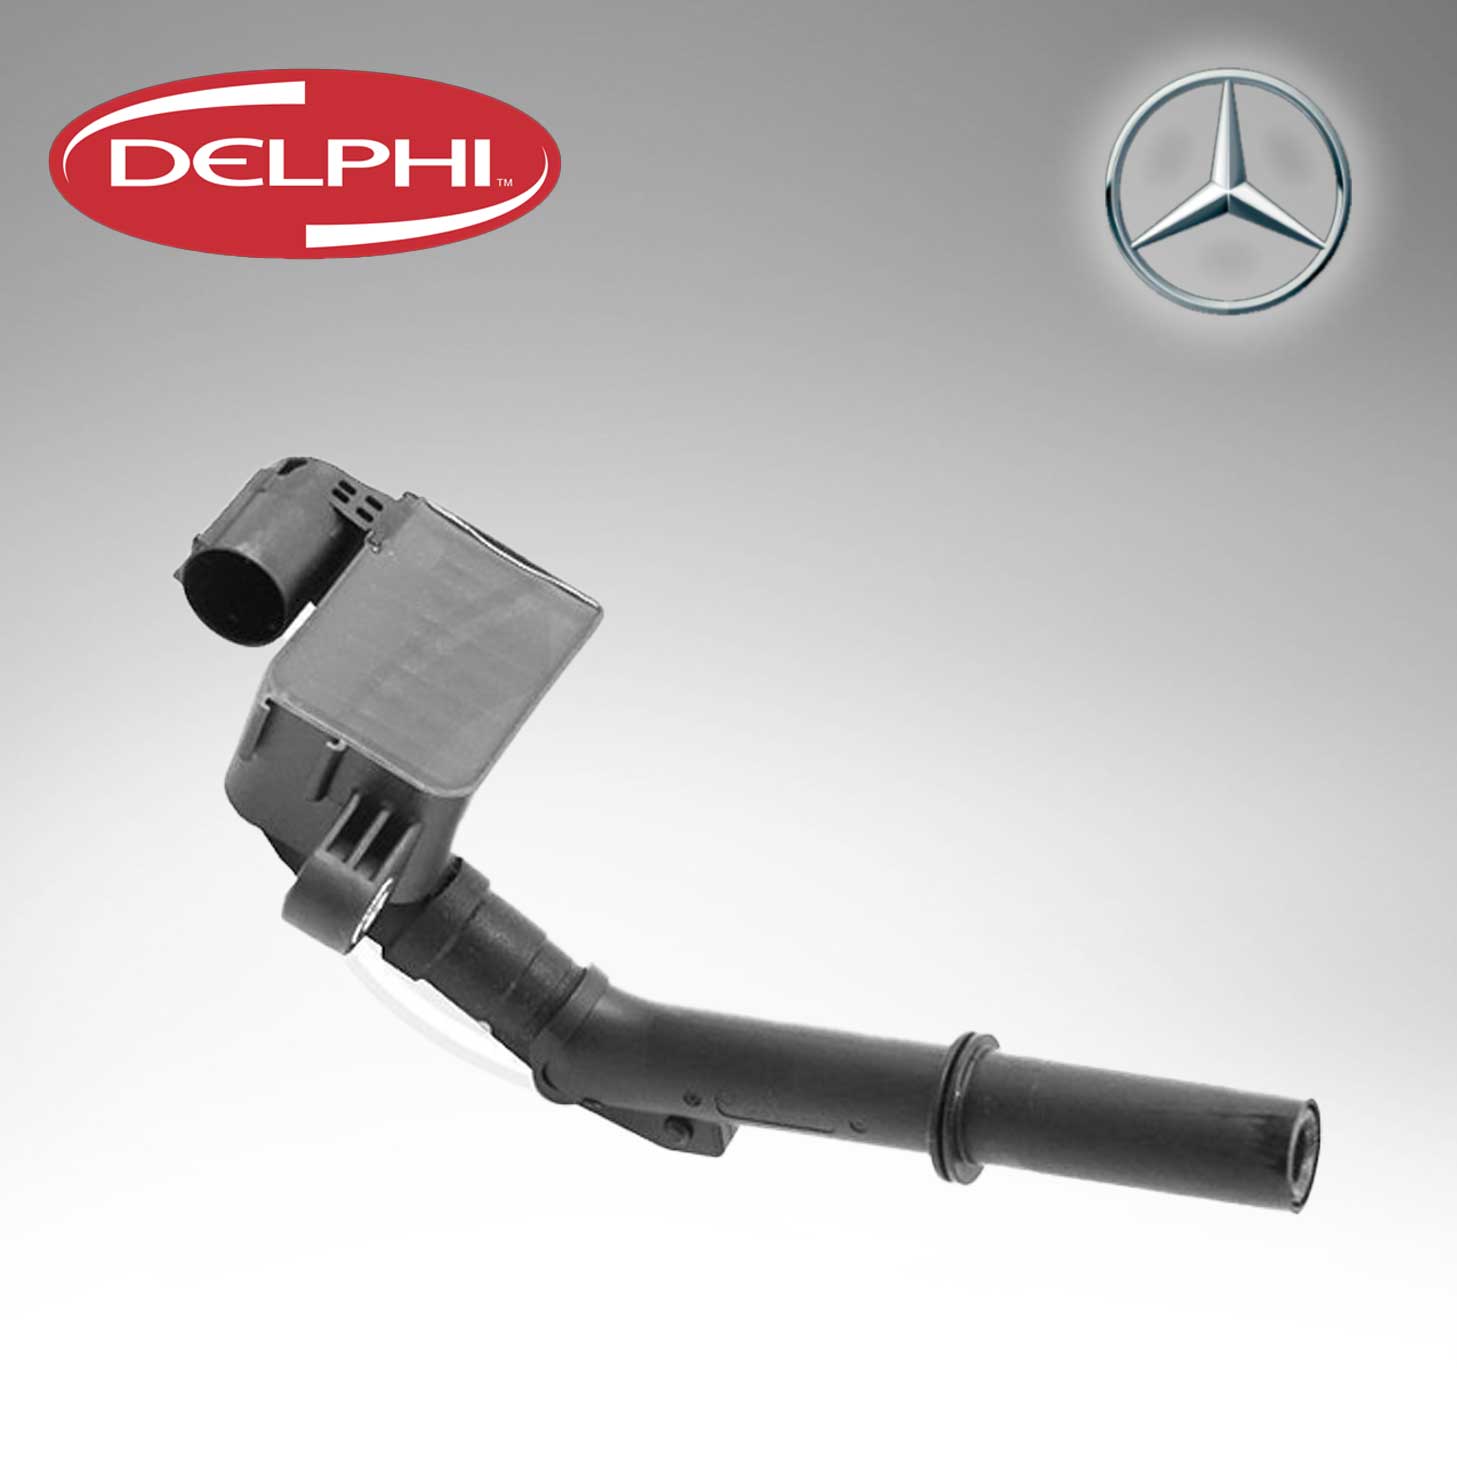 Delphi Ignition COIL GN1069112B1 FOR Mercedes Benz 2769067900